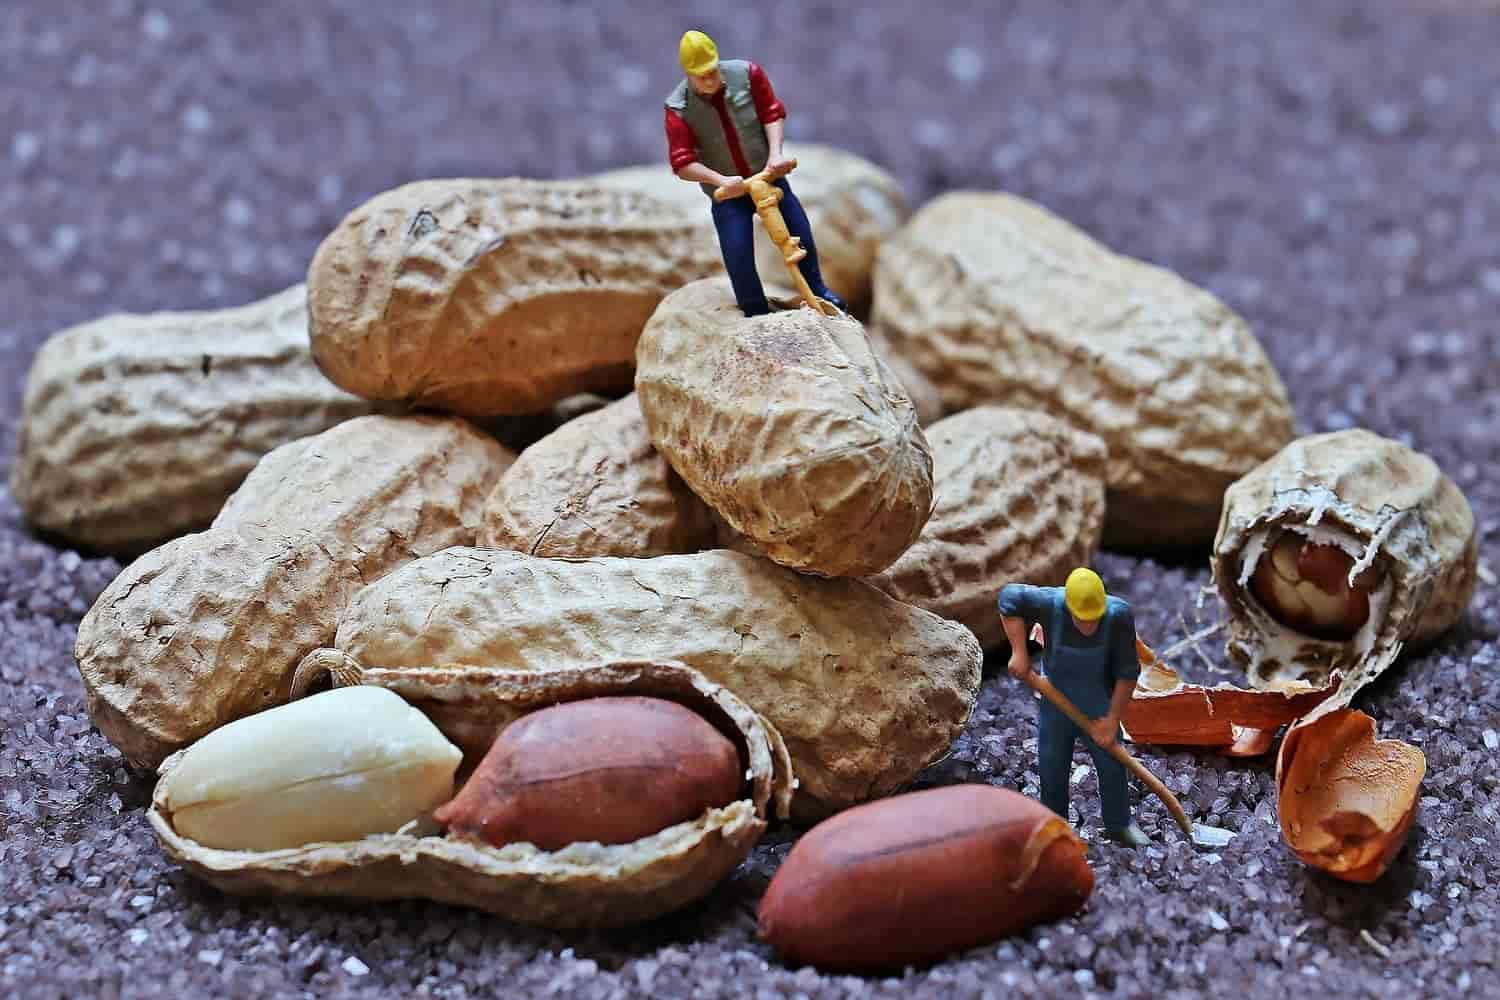 benefits of peanuts